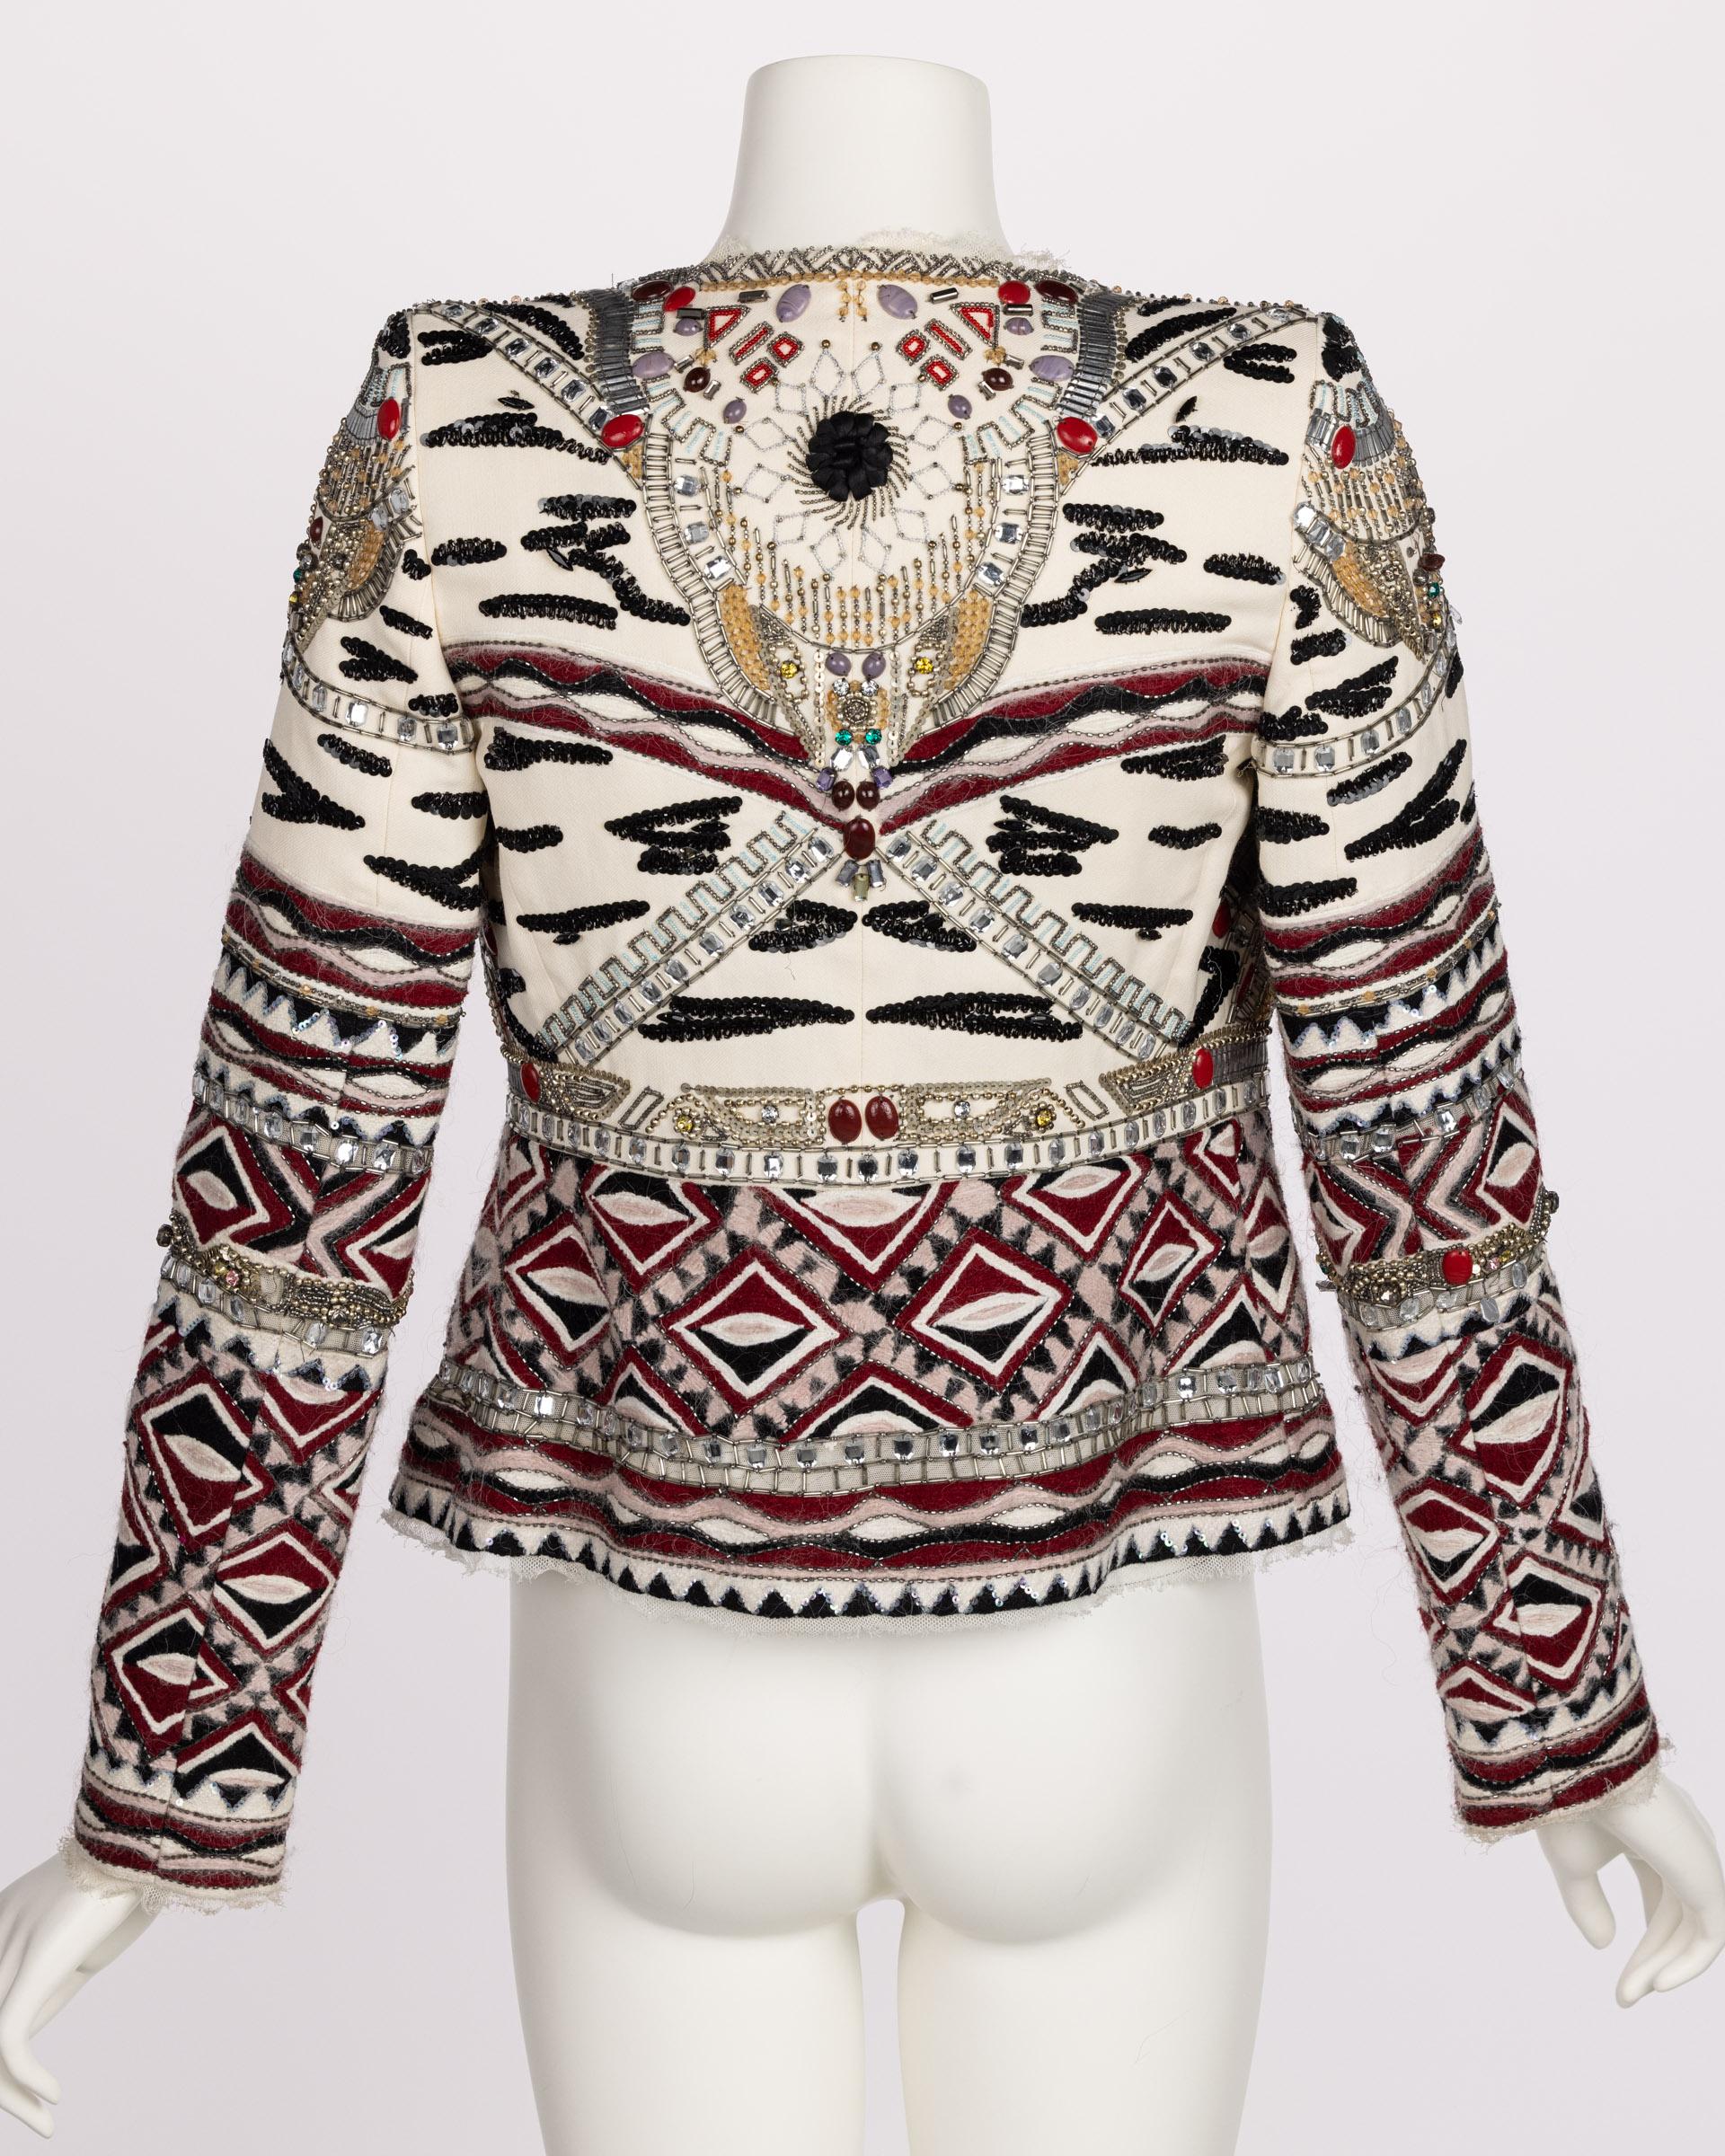  Emilio Pucci Embellished Wool Silk & Cotton Blend Jacket, Pre -Fall 2012 Runway 1